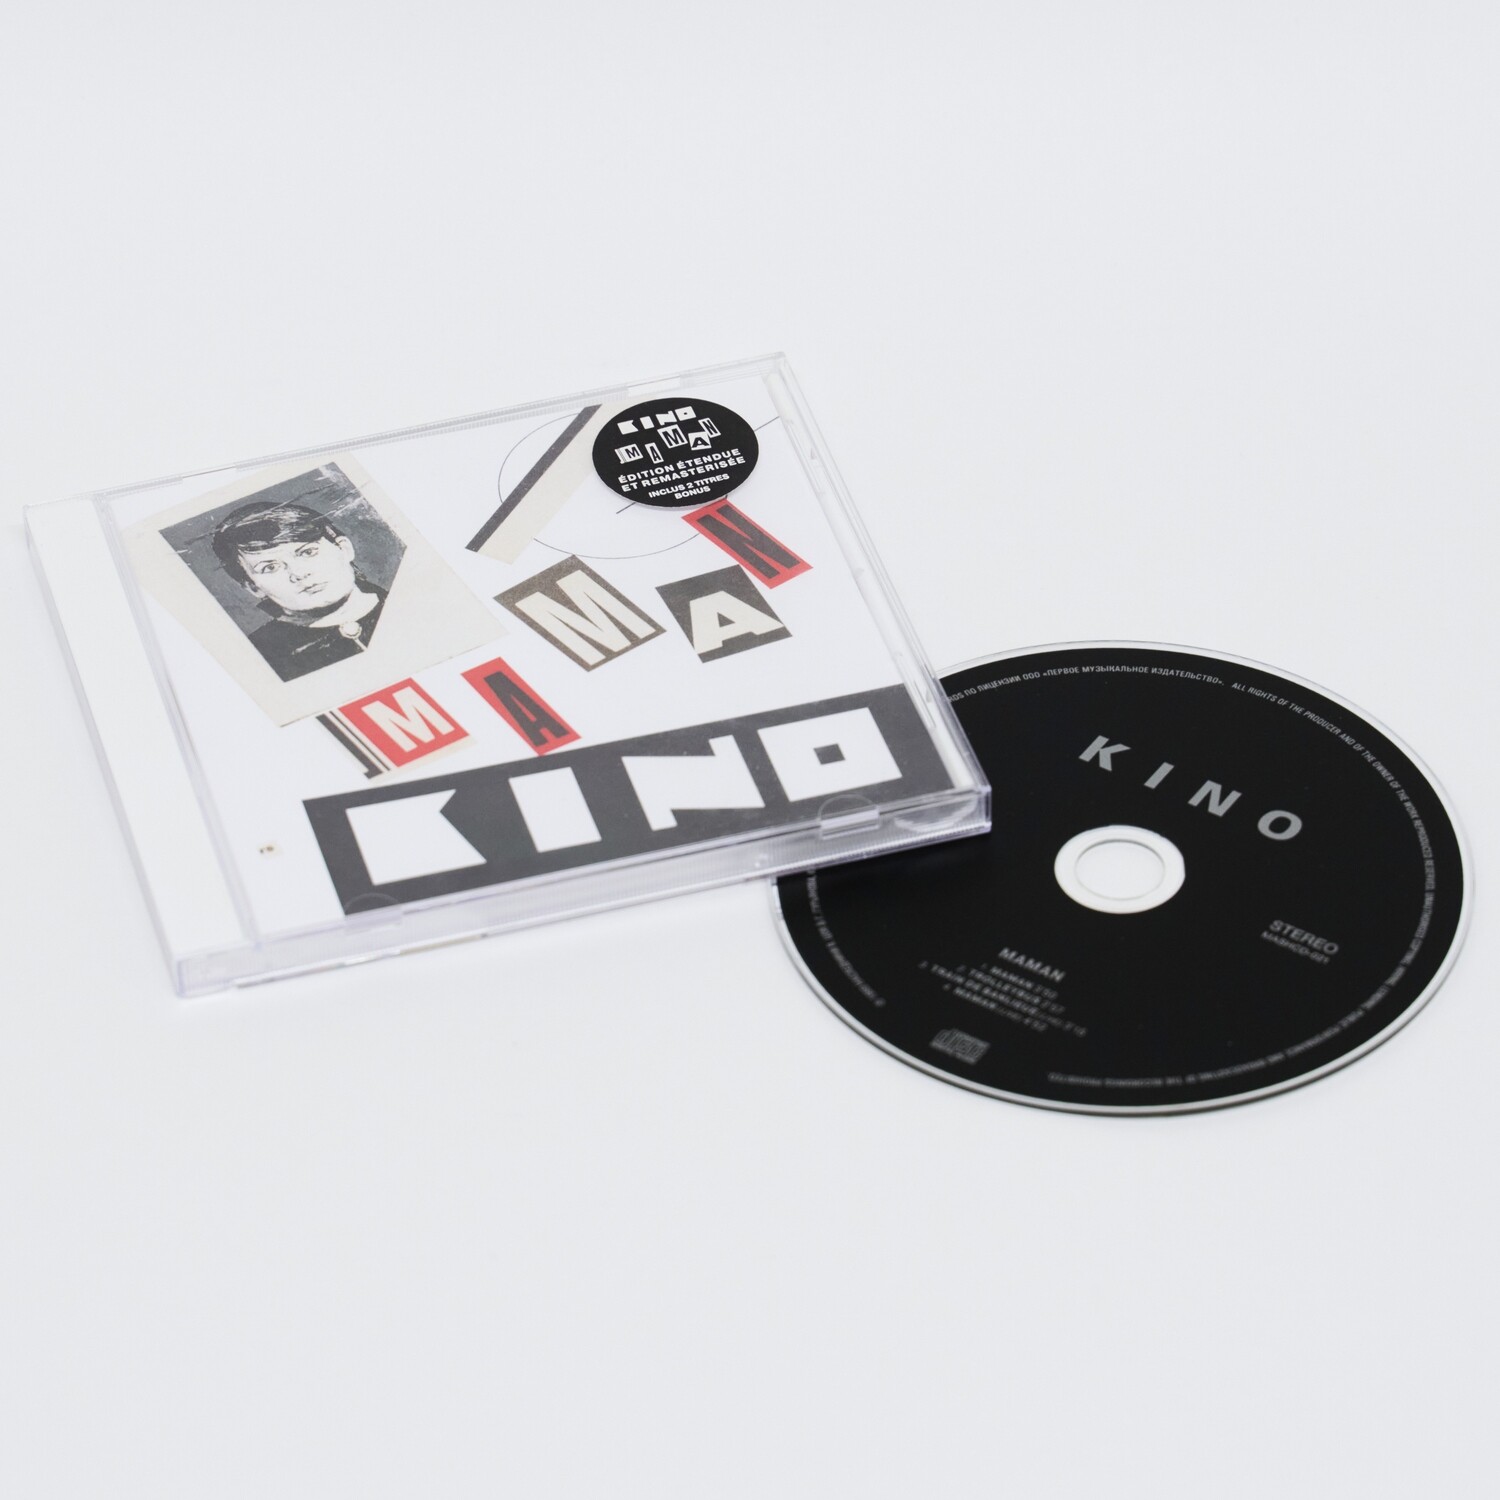 CDS: КИНО — «Maman» (1989/2019) [Limited Edition]